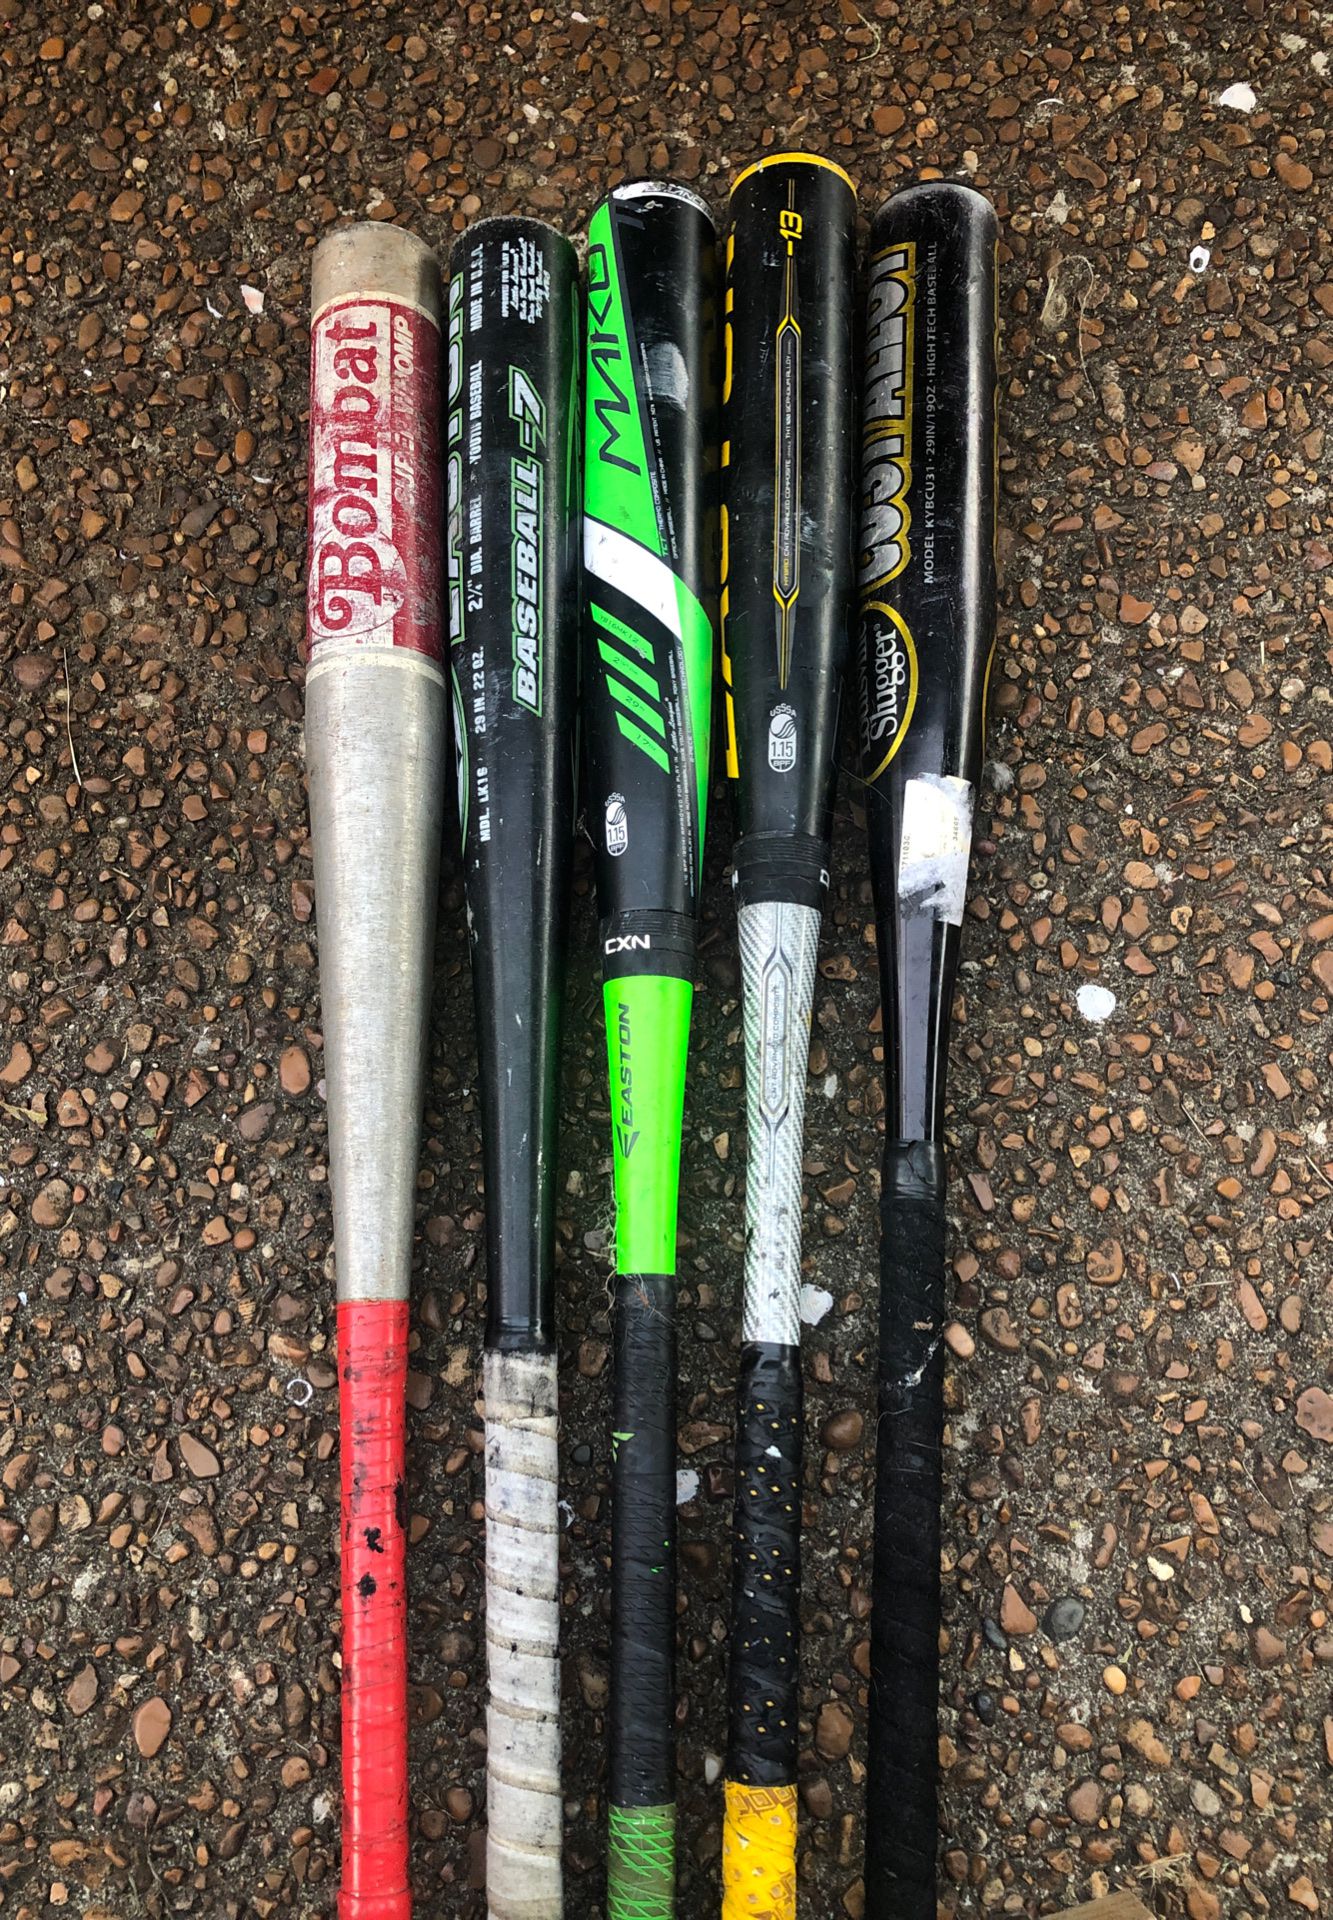 5 baseball bats selling all together